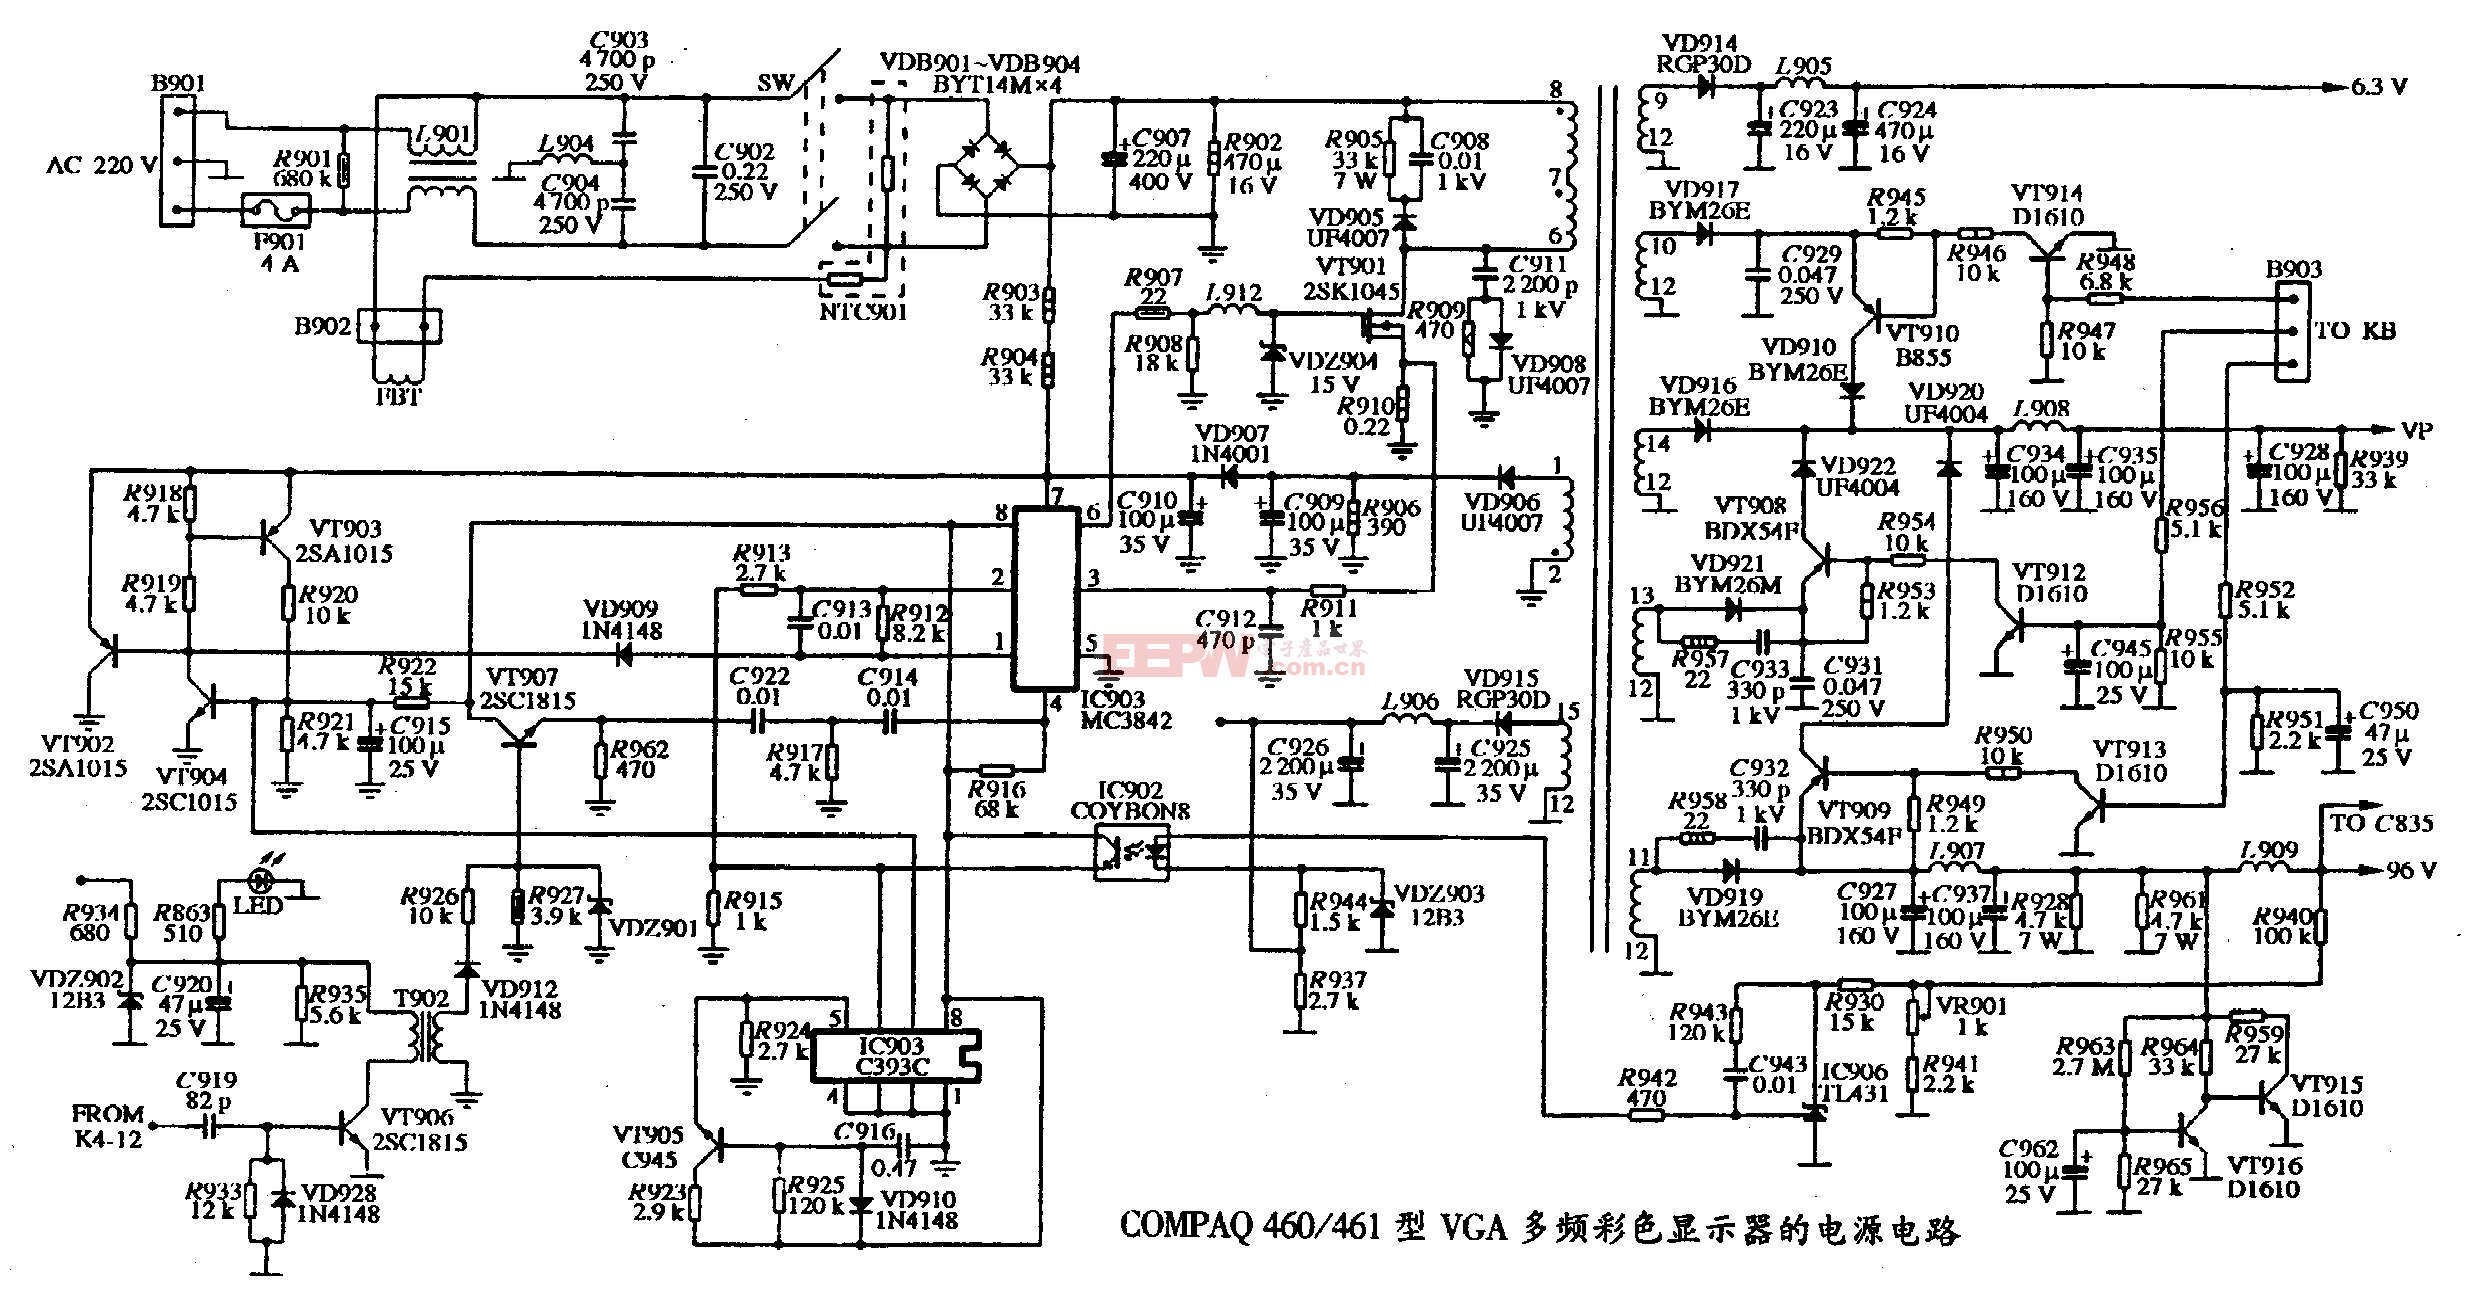 28、COMPAQ 460461型VGA多频彩色显示器的电源电路图